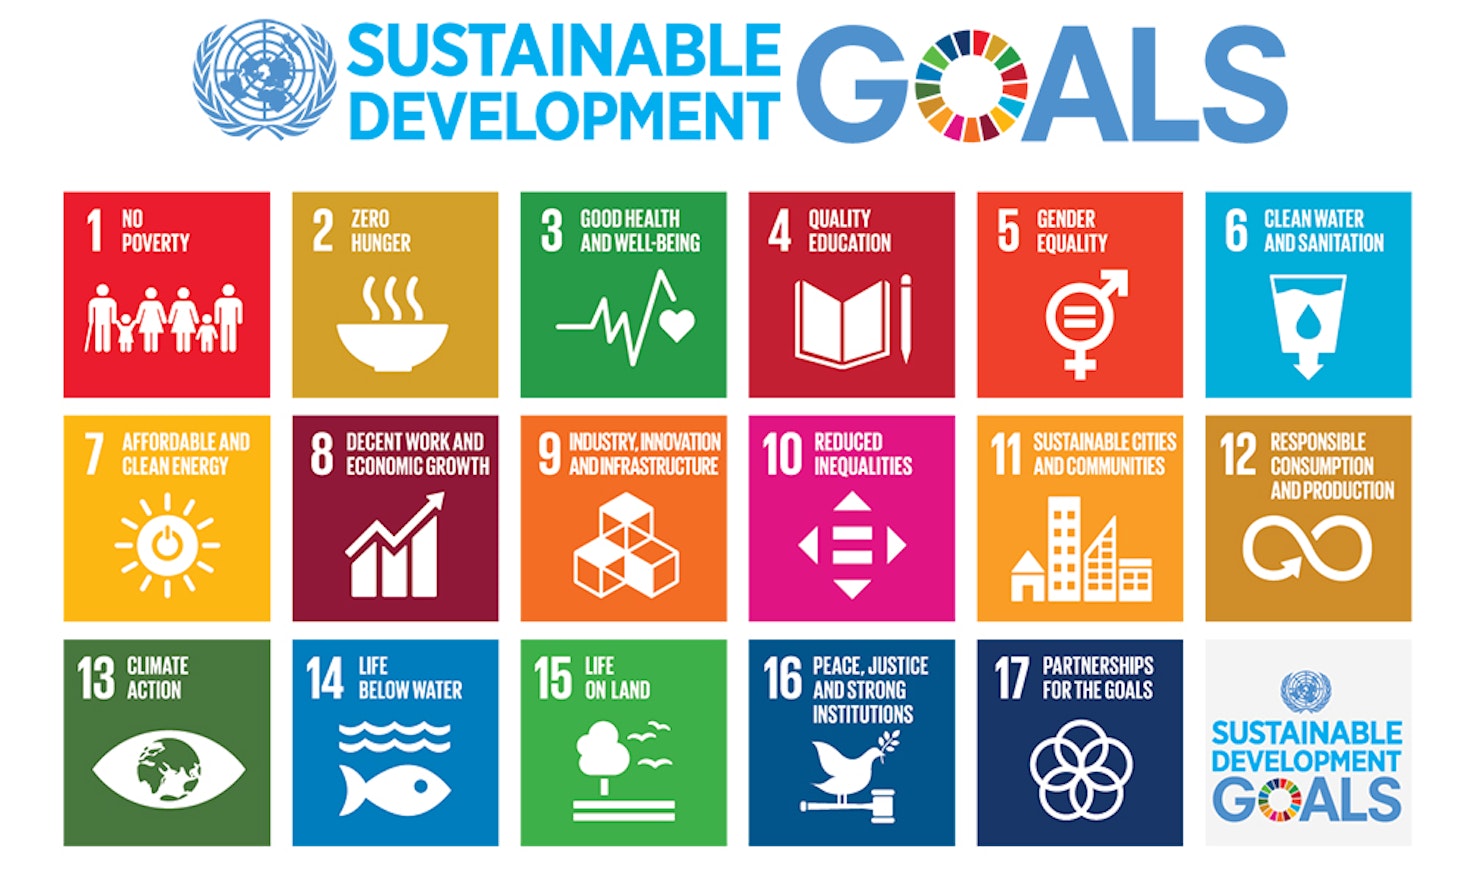 EU progress towards its Sustainable Development Goals